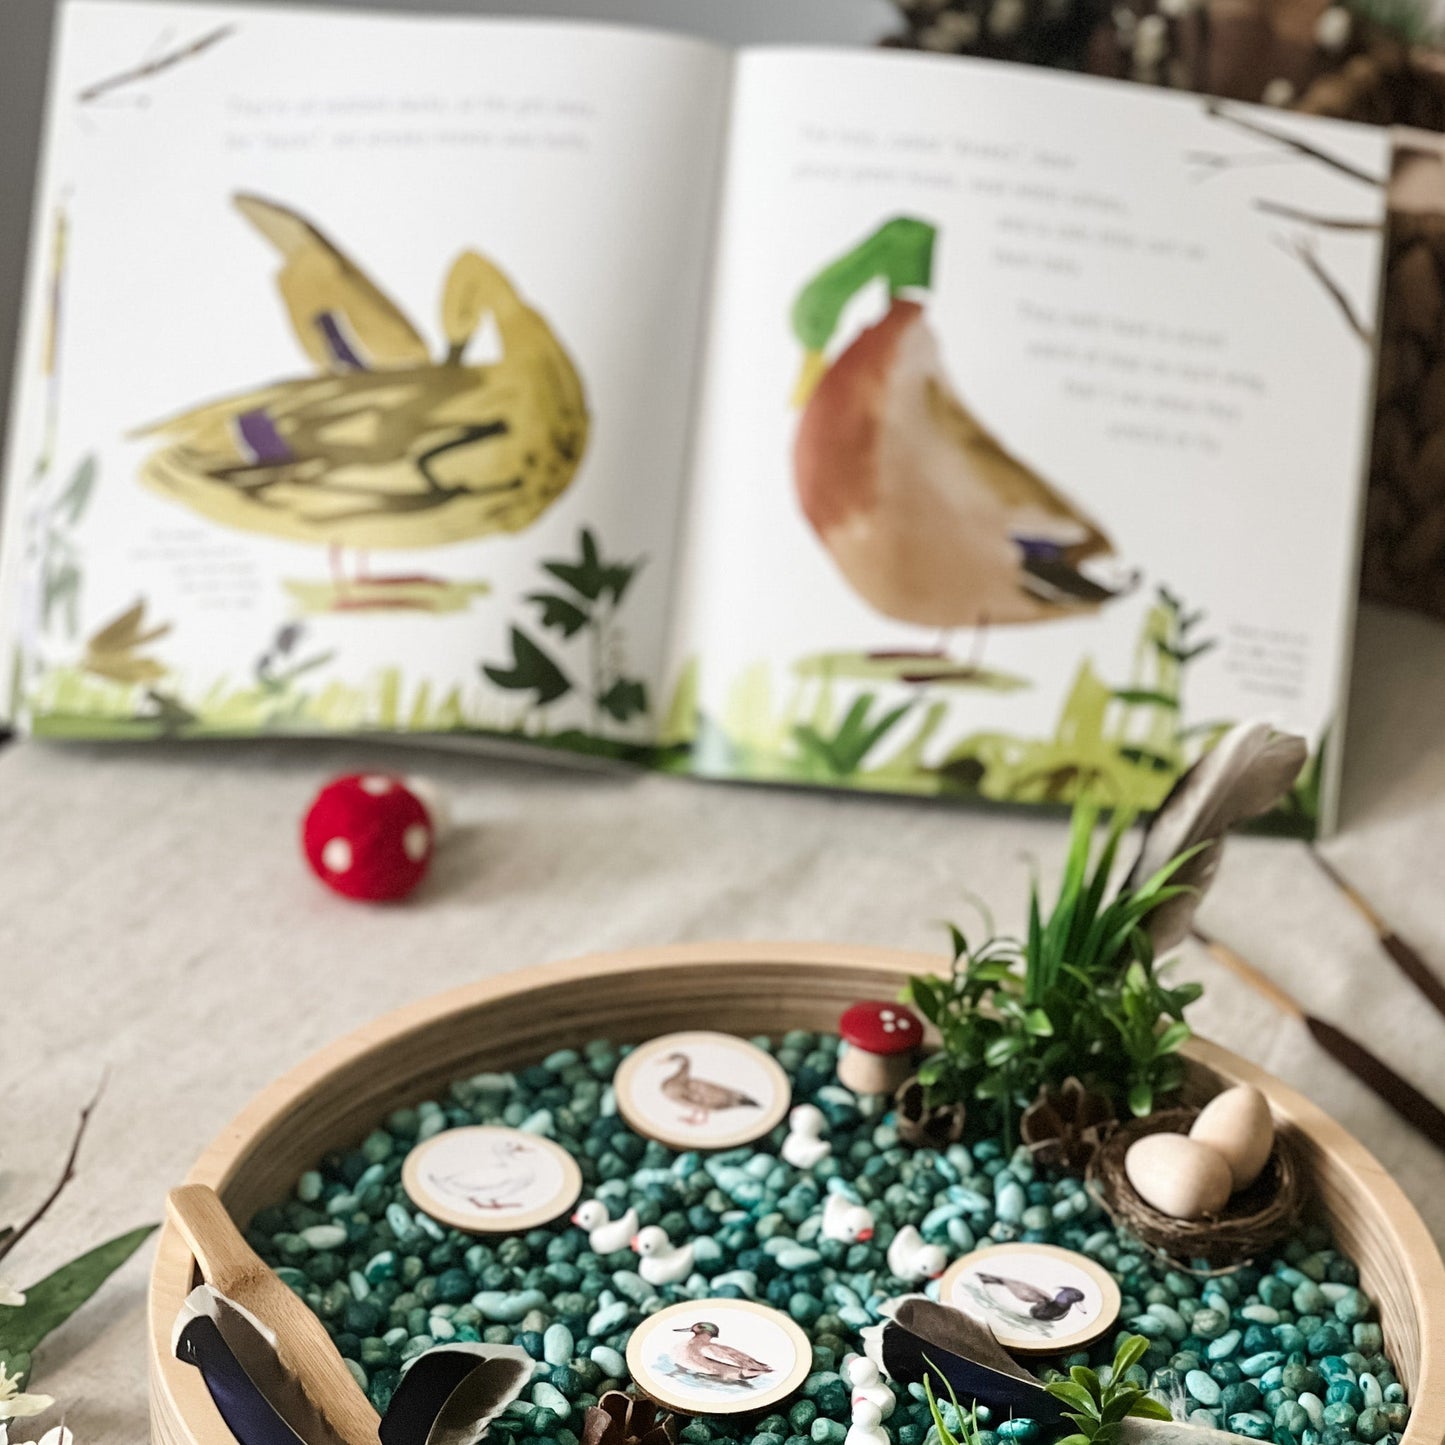 Ducks - Playful Minds Activity Box and Book